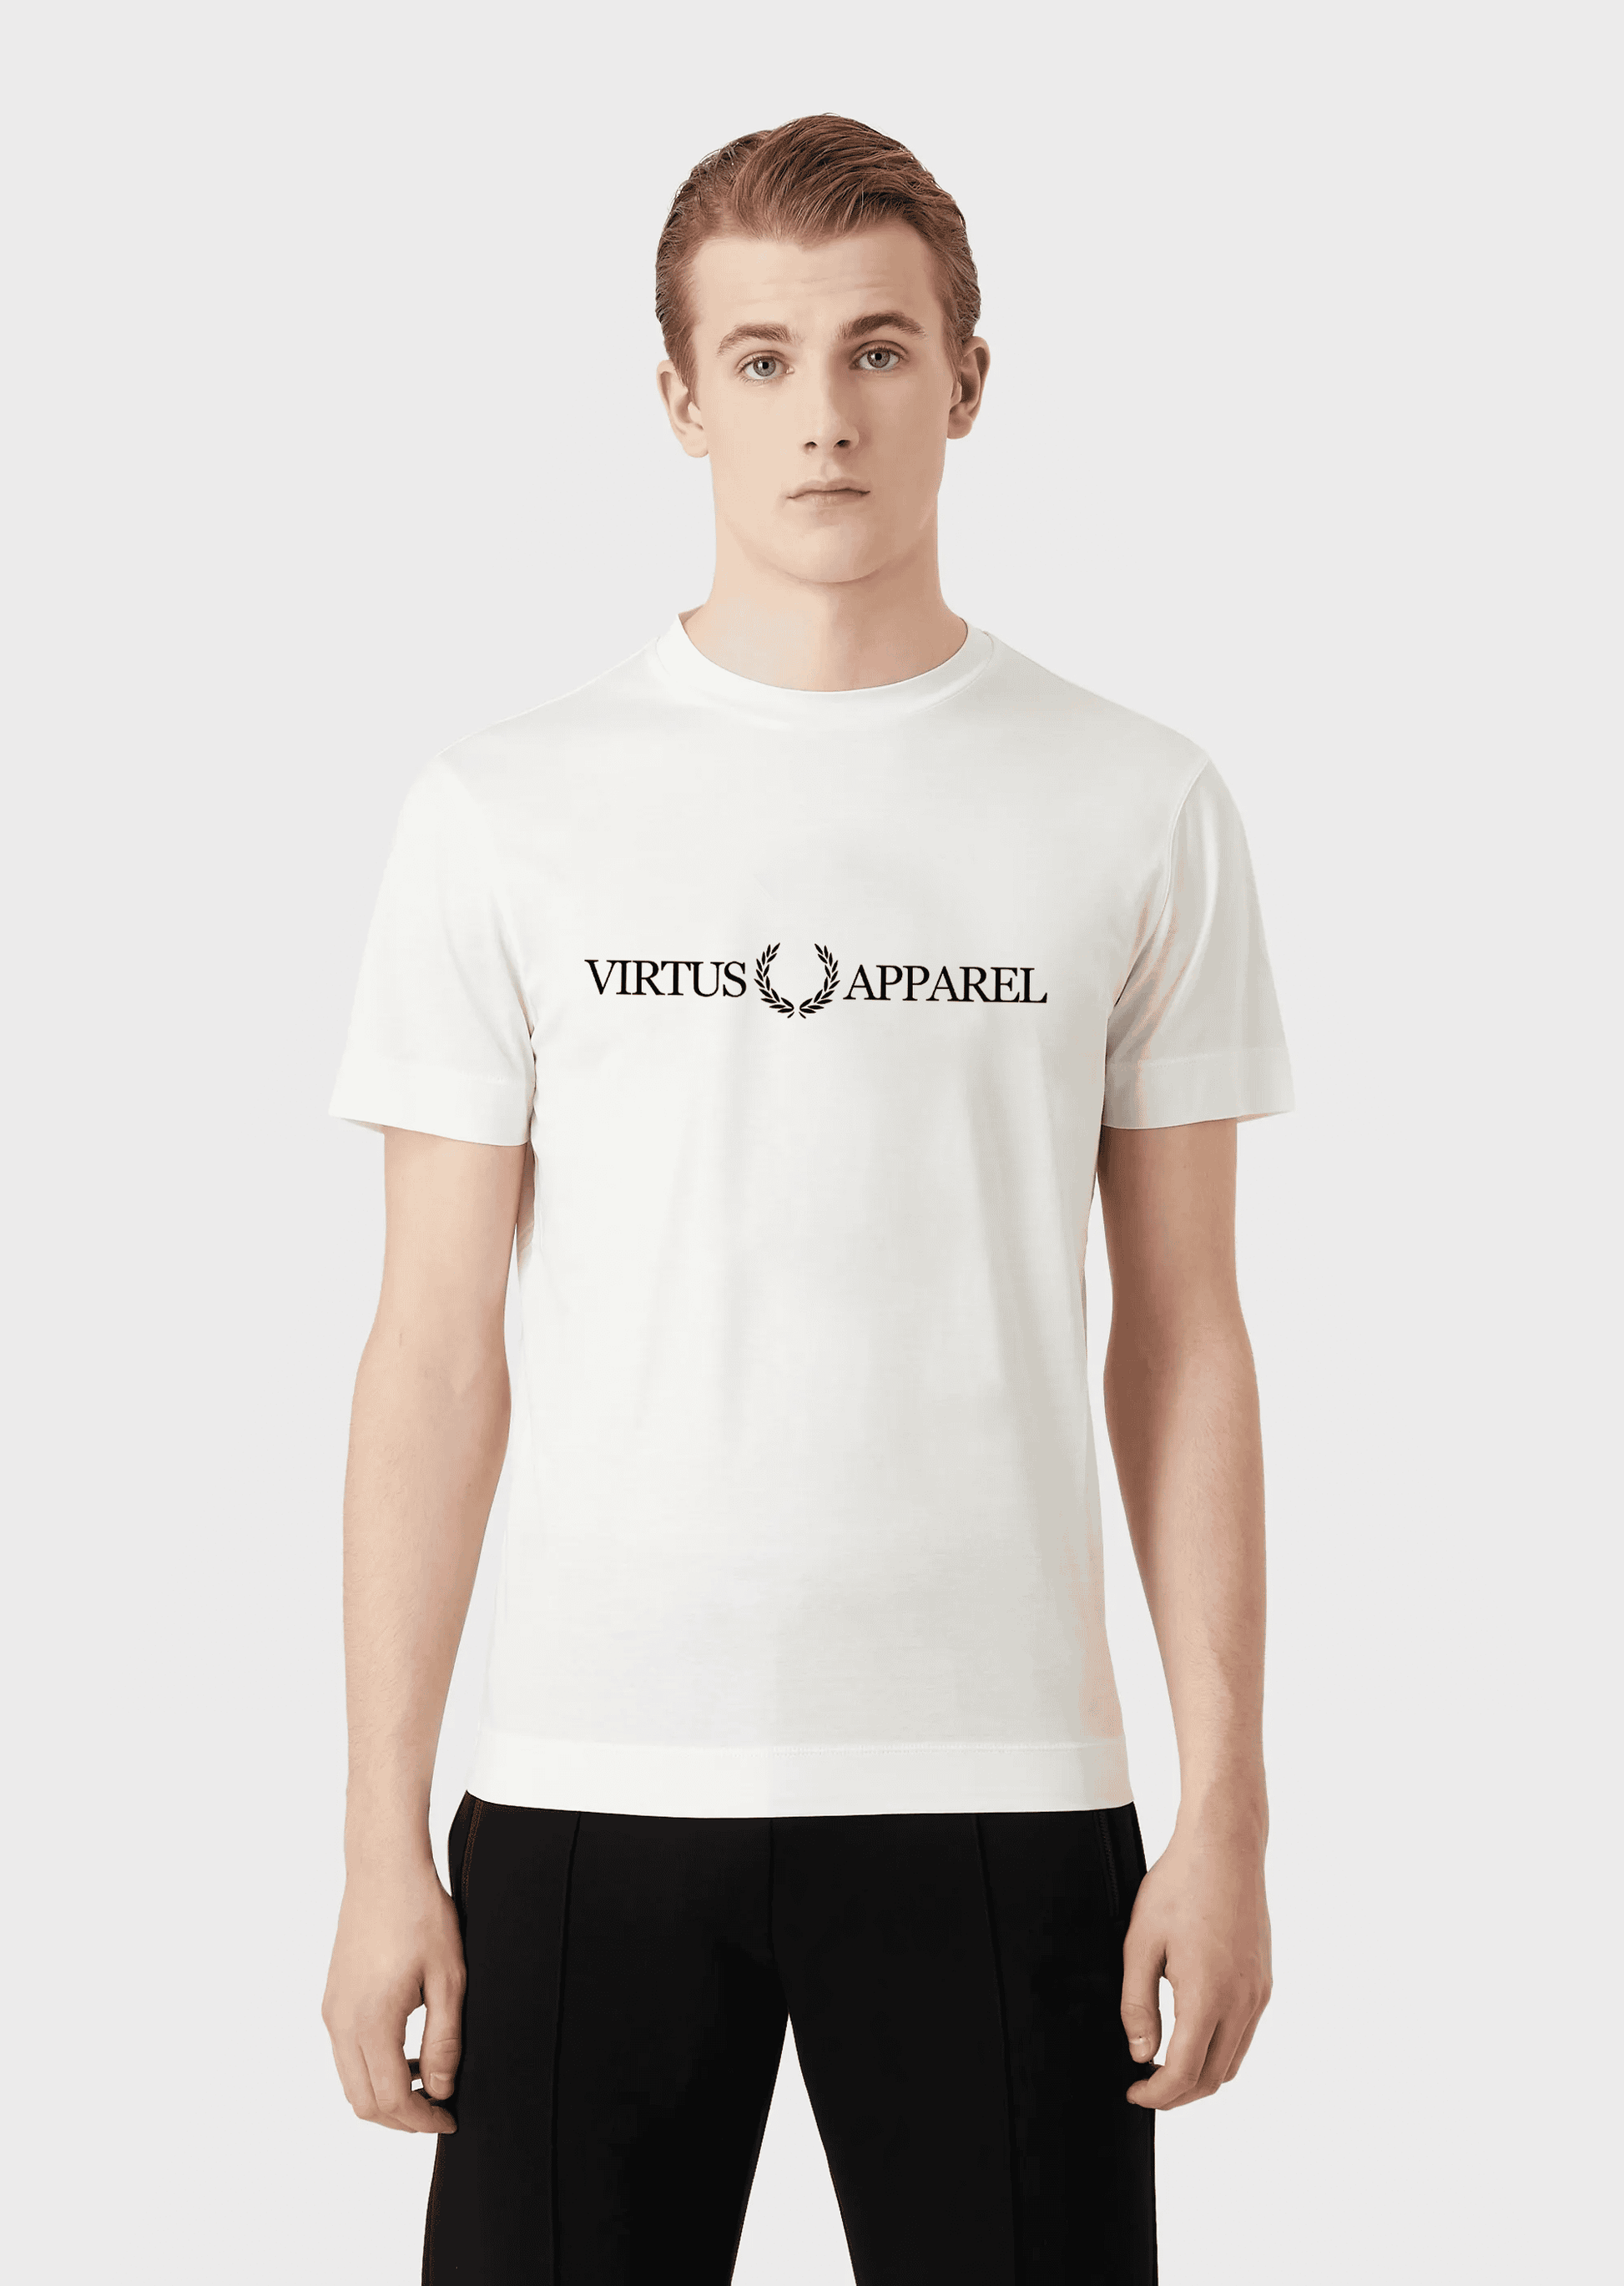 Virtus Apparel T-Shirt – Virtus Apparel Store